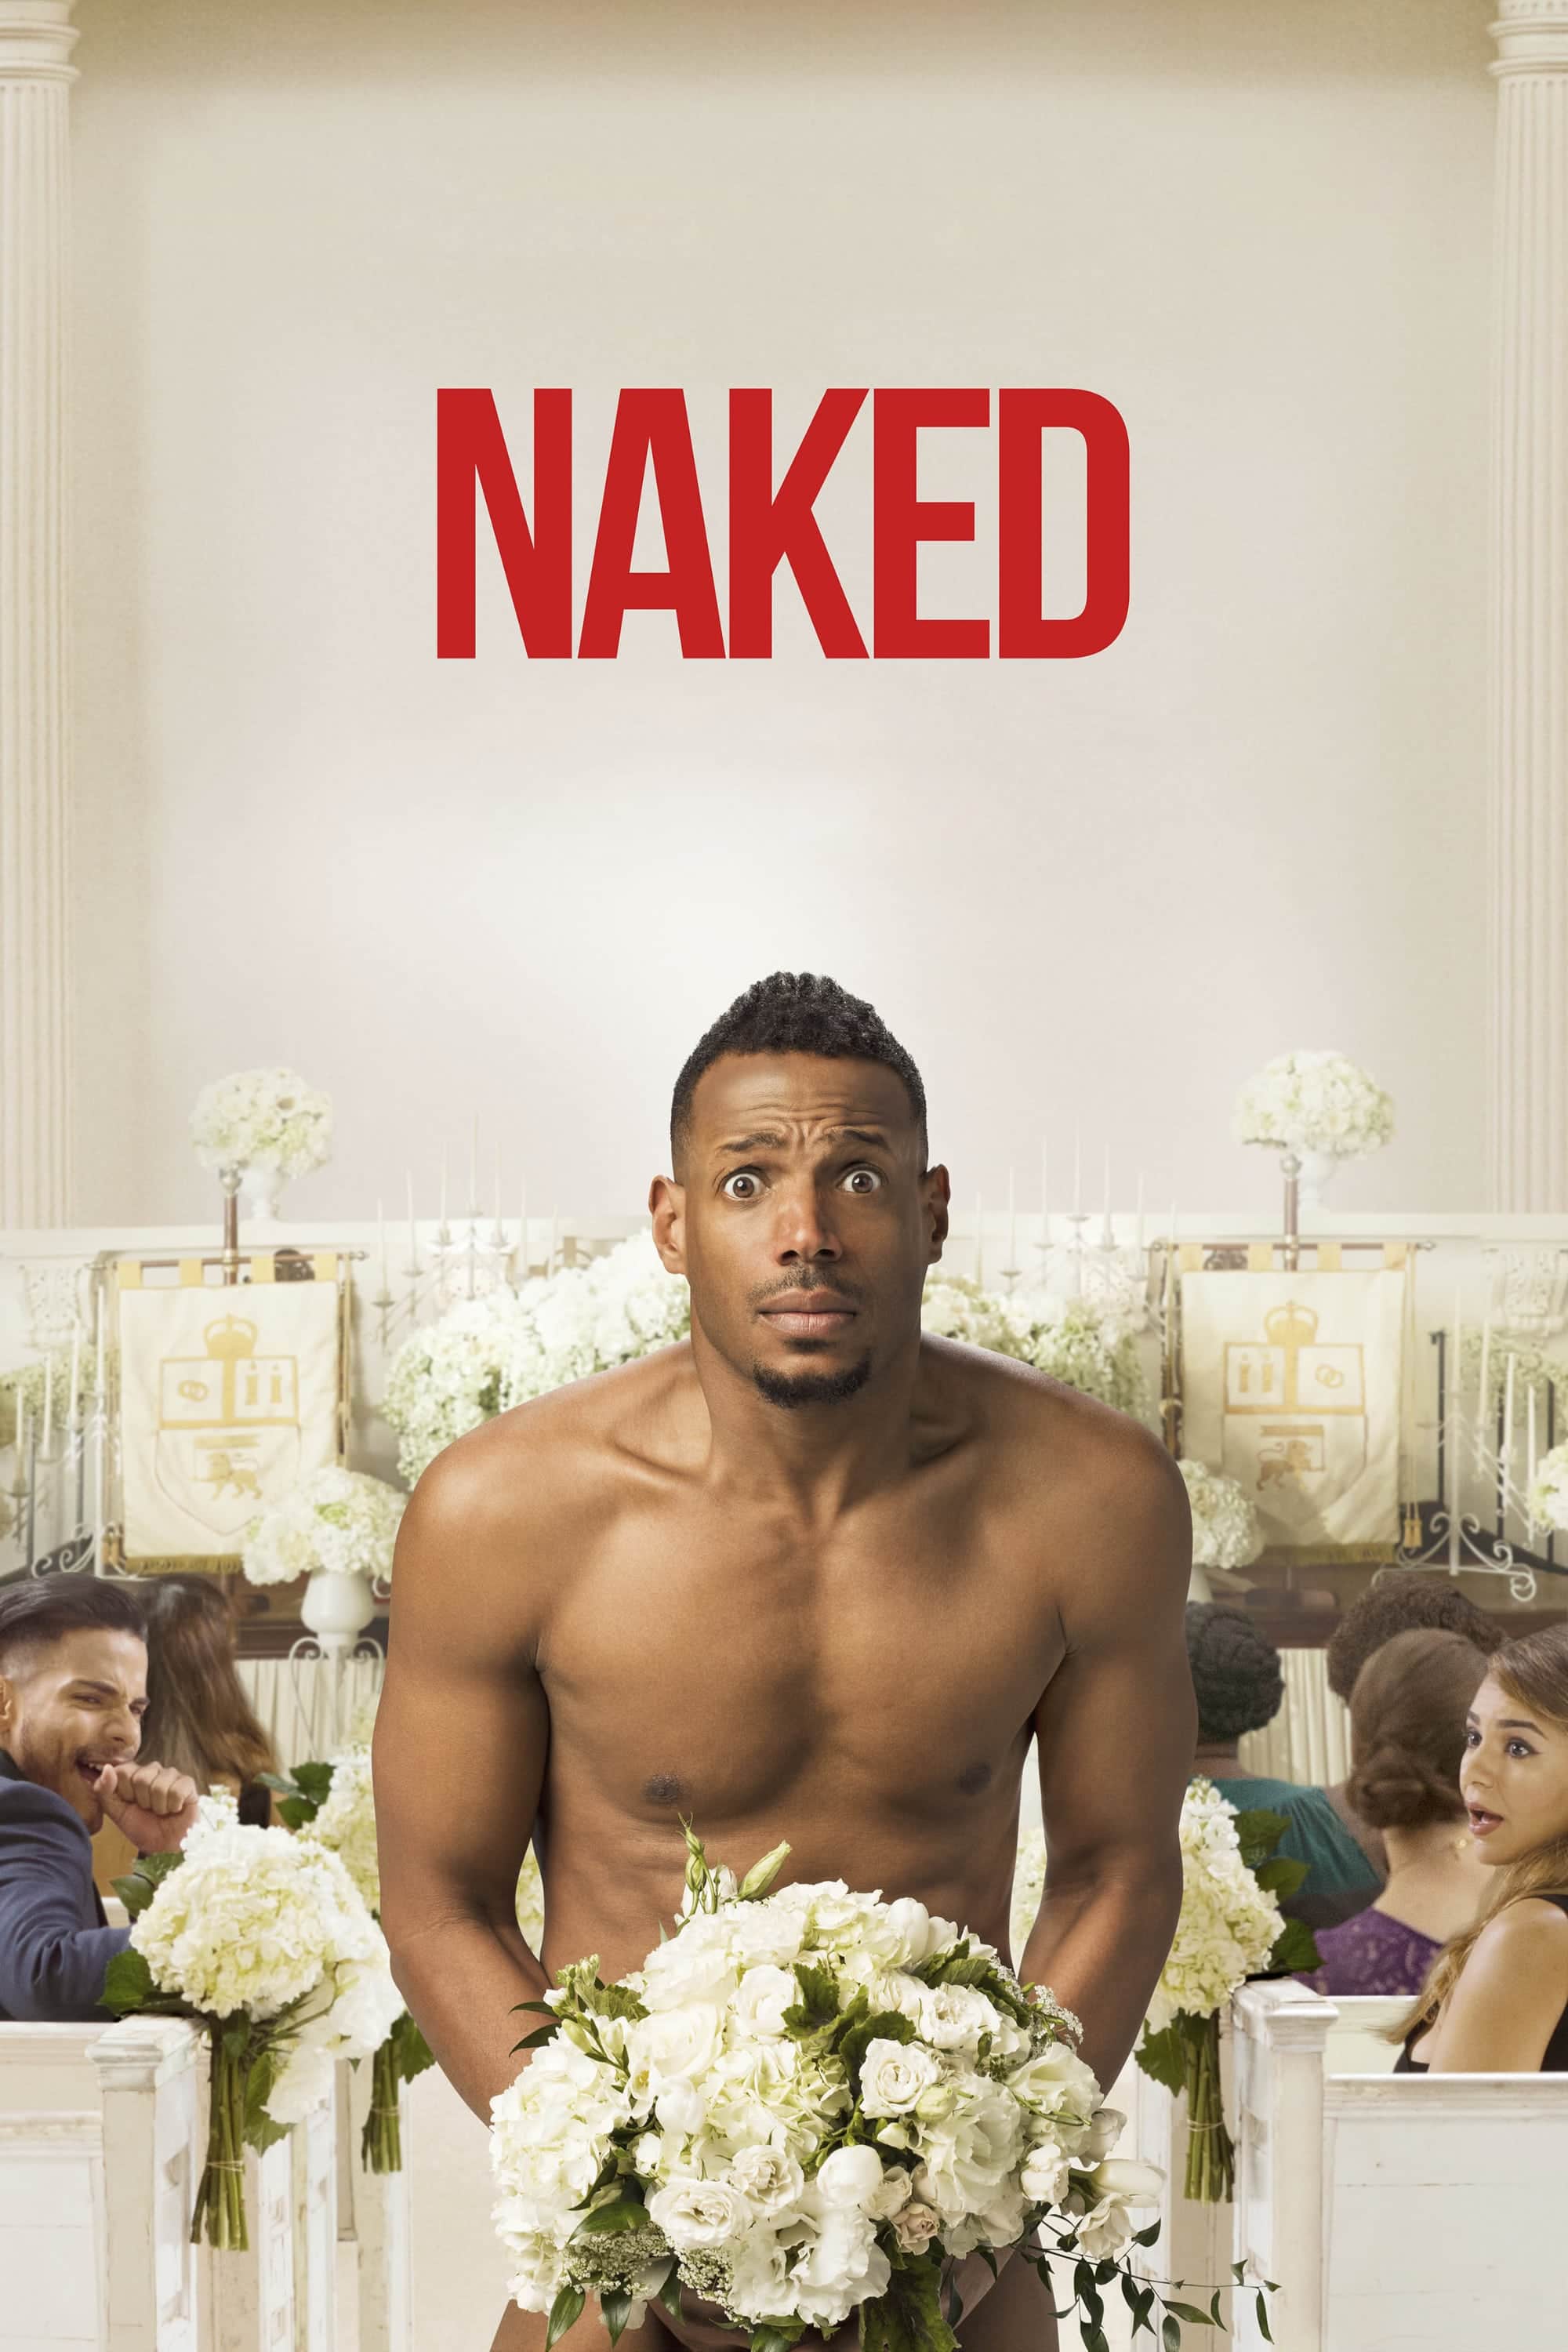 Plakat von "Naked"